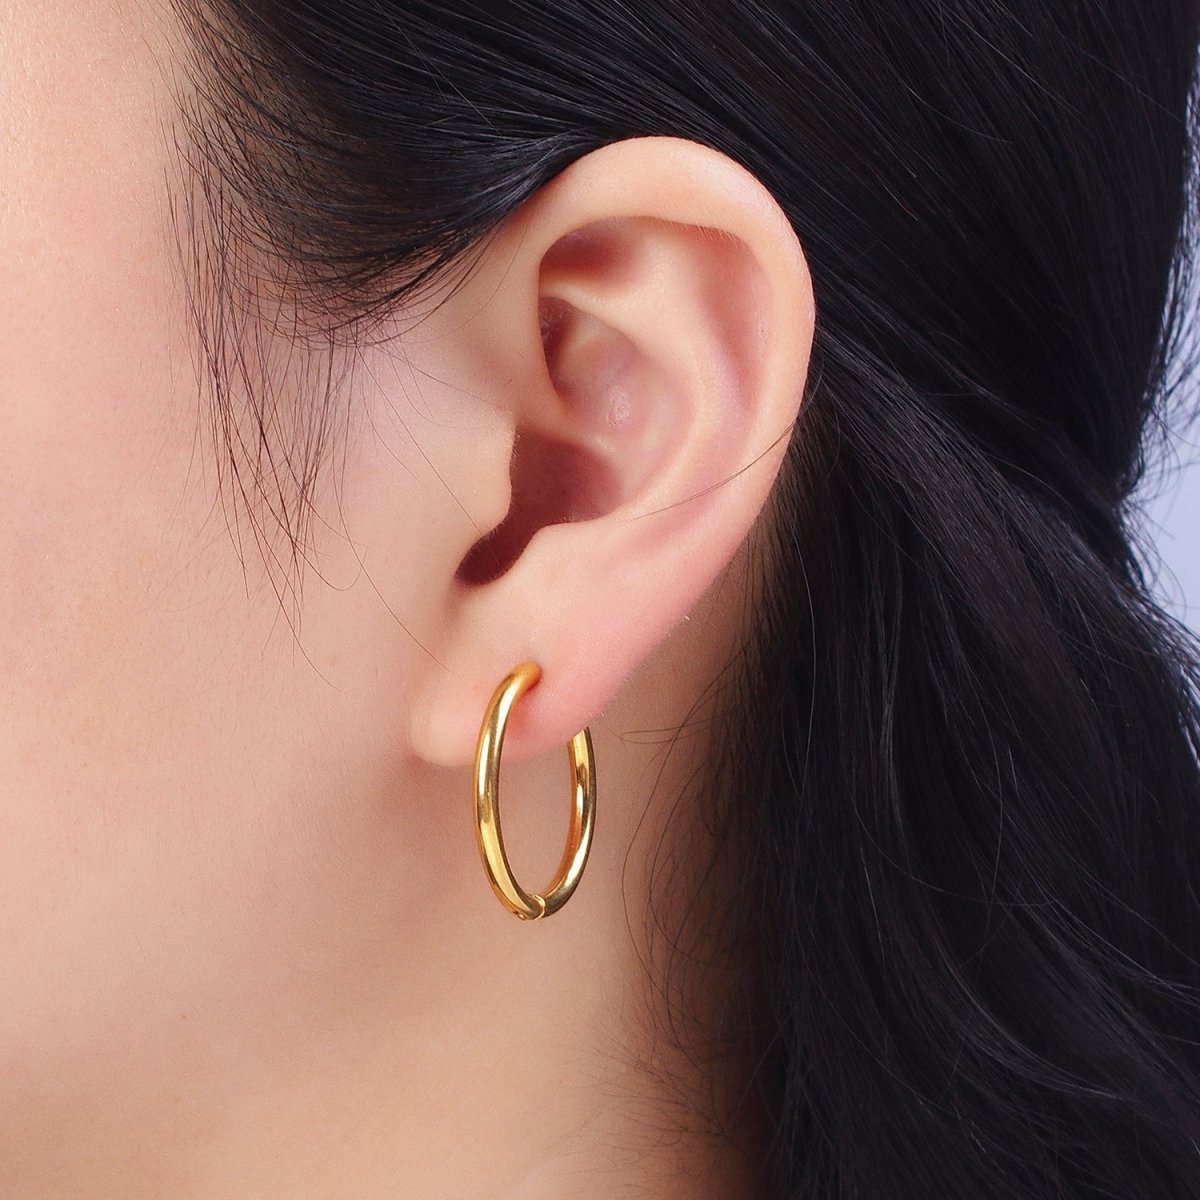 24K Gold Filled Hoop Earrings-Sleeper Earrings Hypoallergenic Earring Hoops Women Hoops Everyday Simple Hoops-Tiny Hoops P-289 P-290 P-291 P-292 P-293 P-294 P-295 P-296 P-297 P-298 - DLUXCA